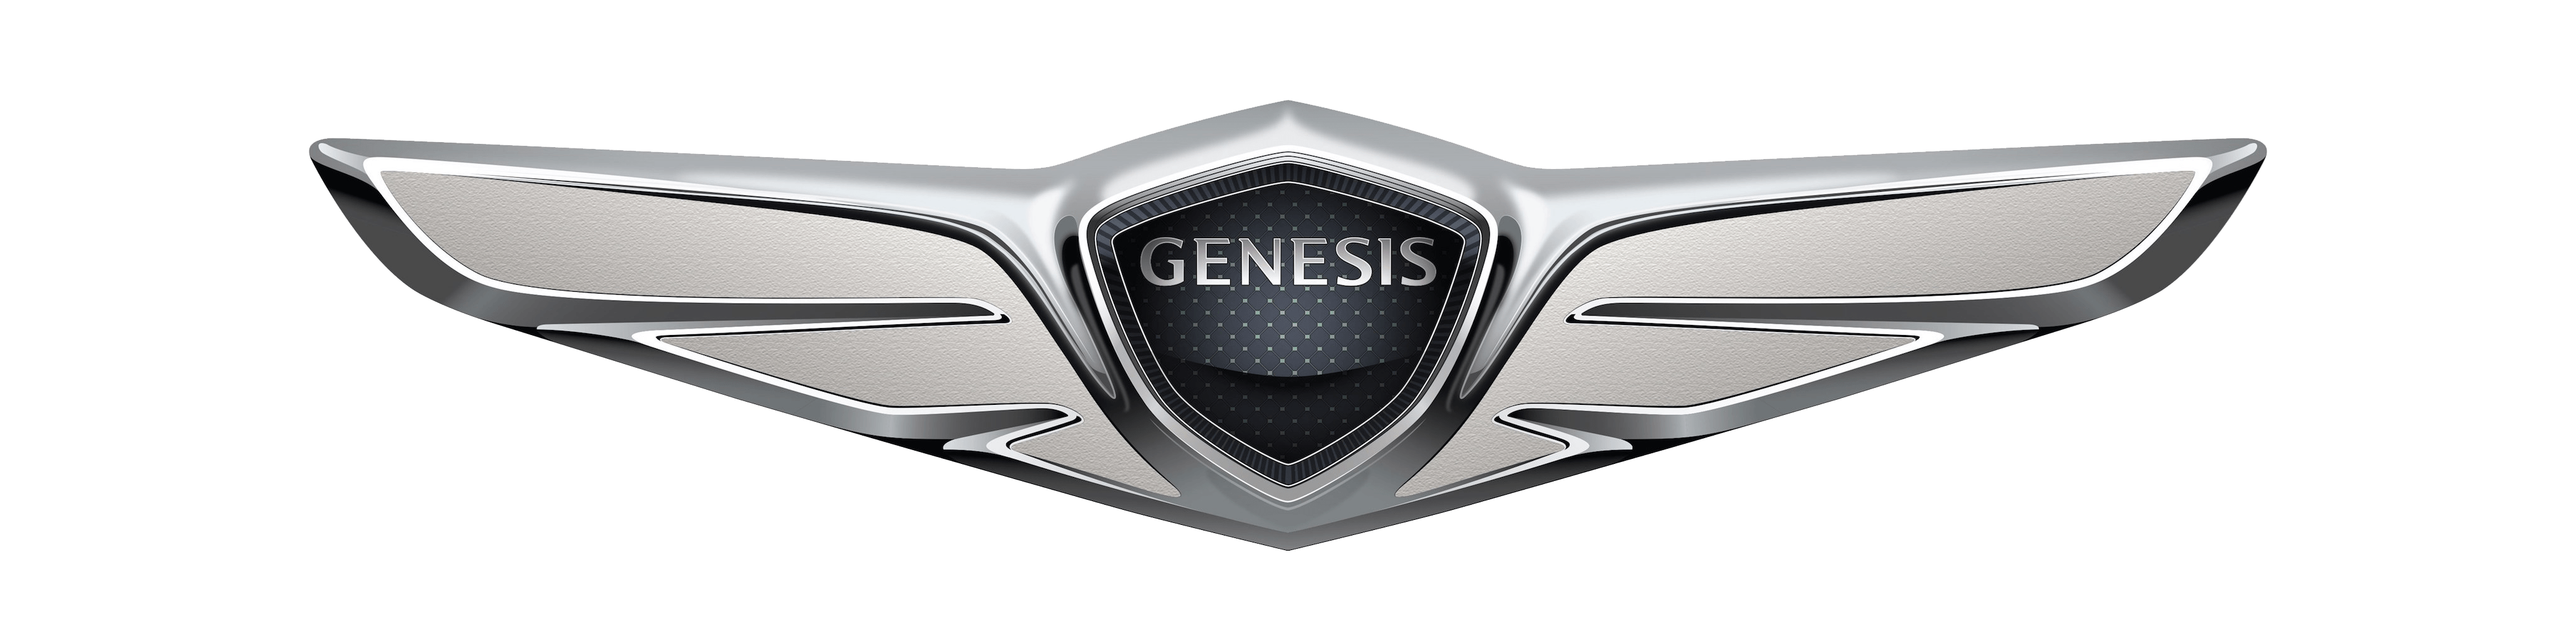 Hyundai Genesis Logo - Genesis Logo Meaning and History, latest models. World Cars Brands